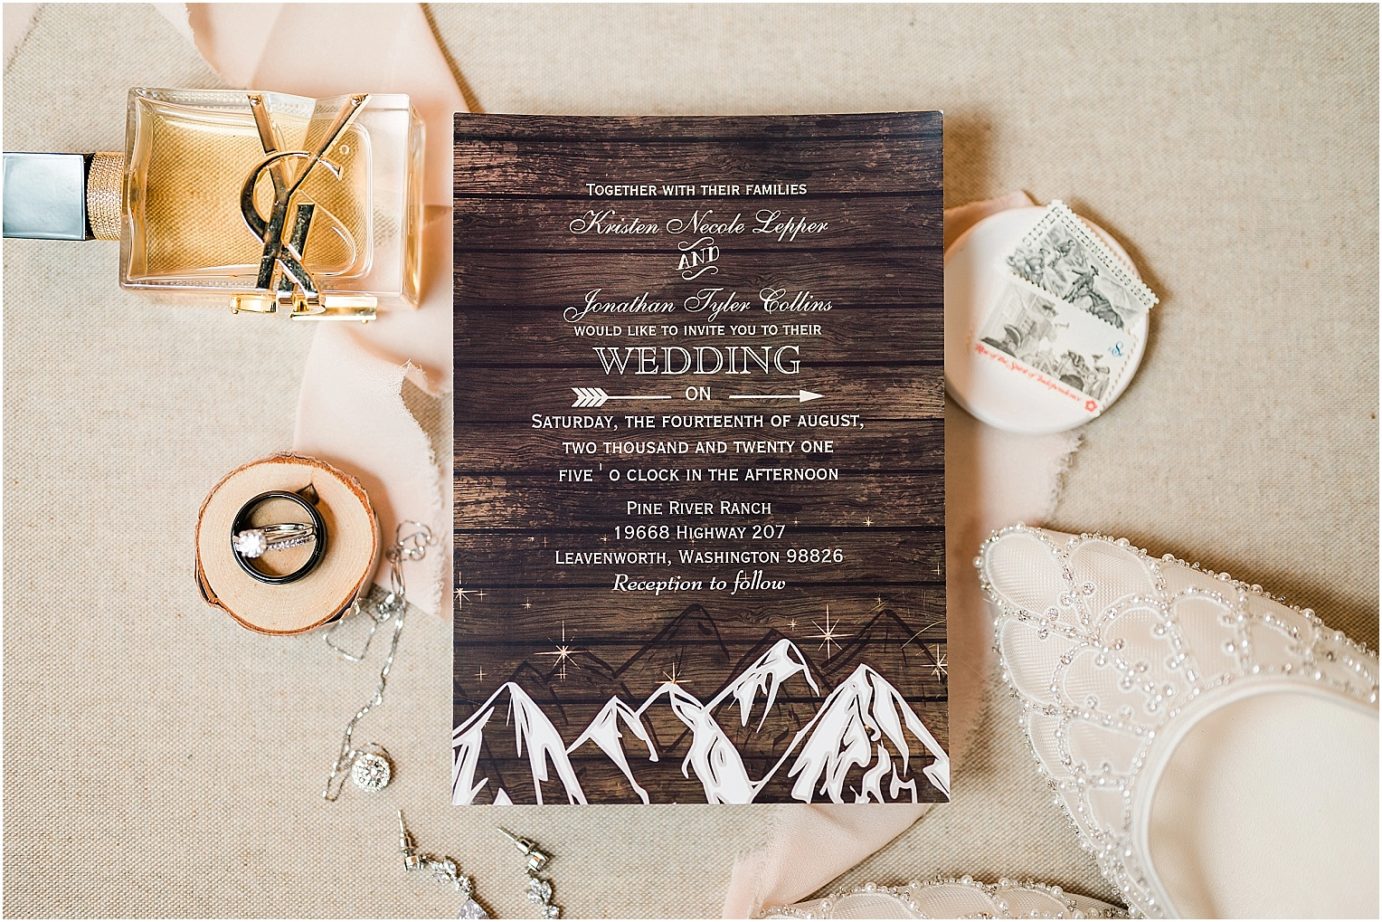 Intimate Pine River Ranch Wedding Leavenworth Photographer Jon and Kristen wedding invitation